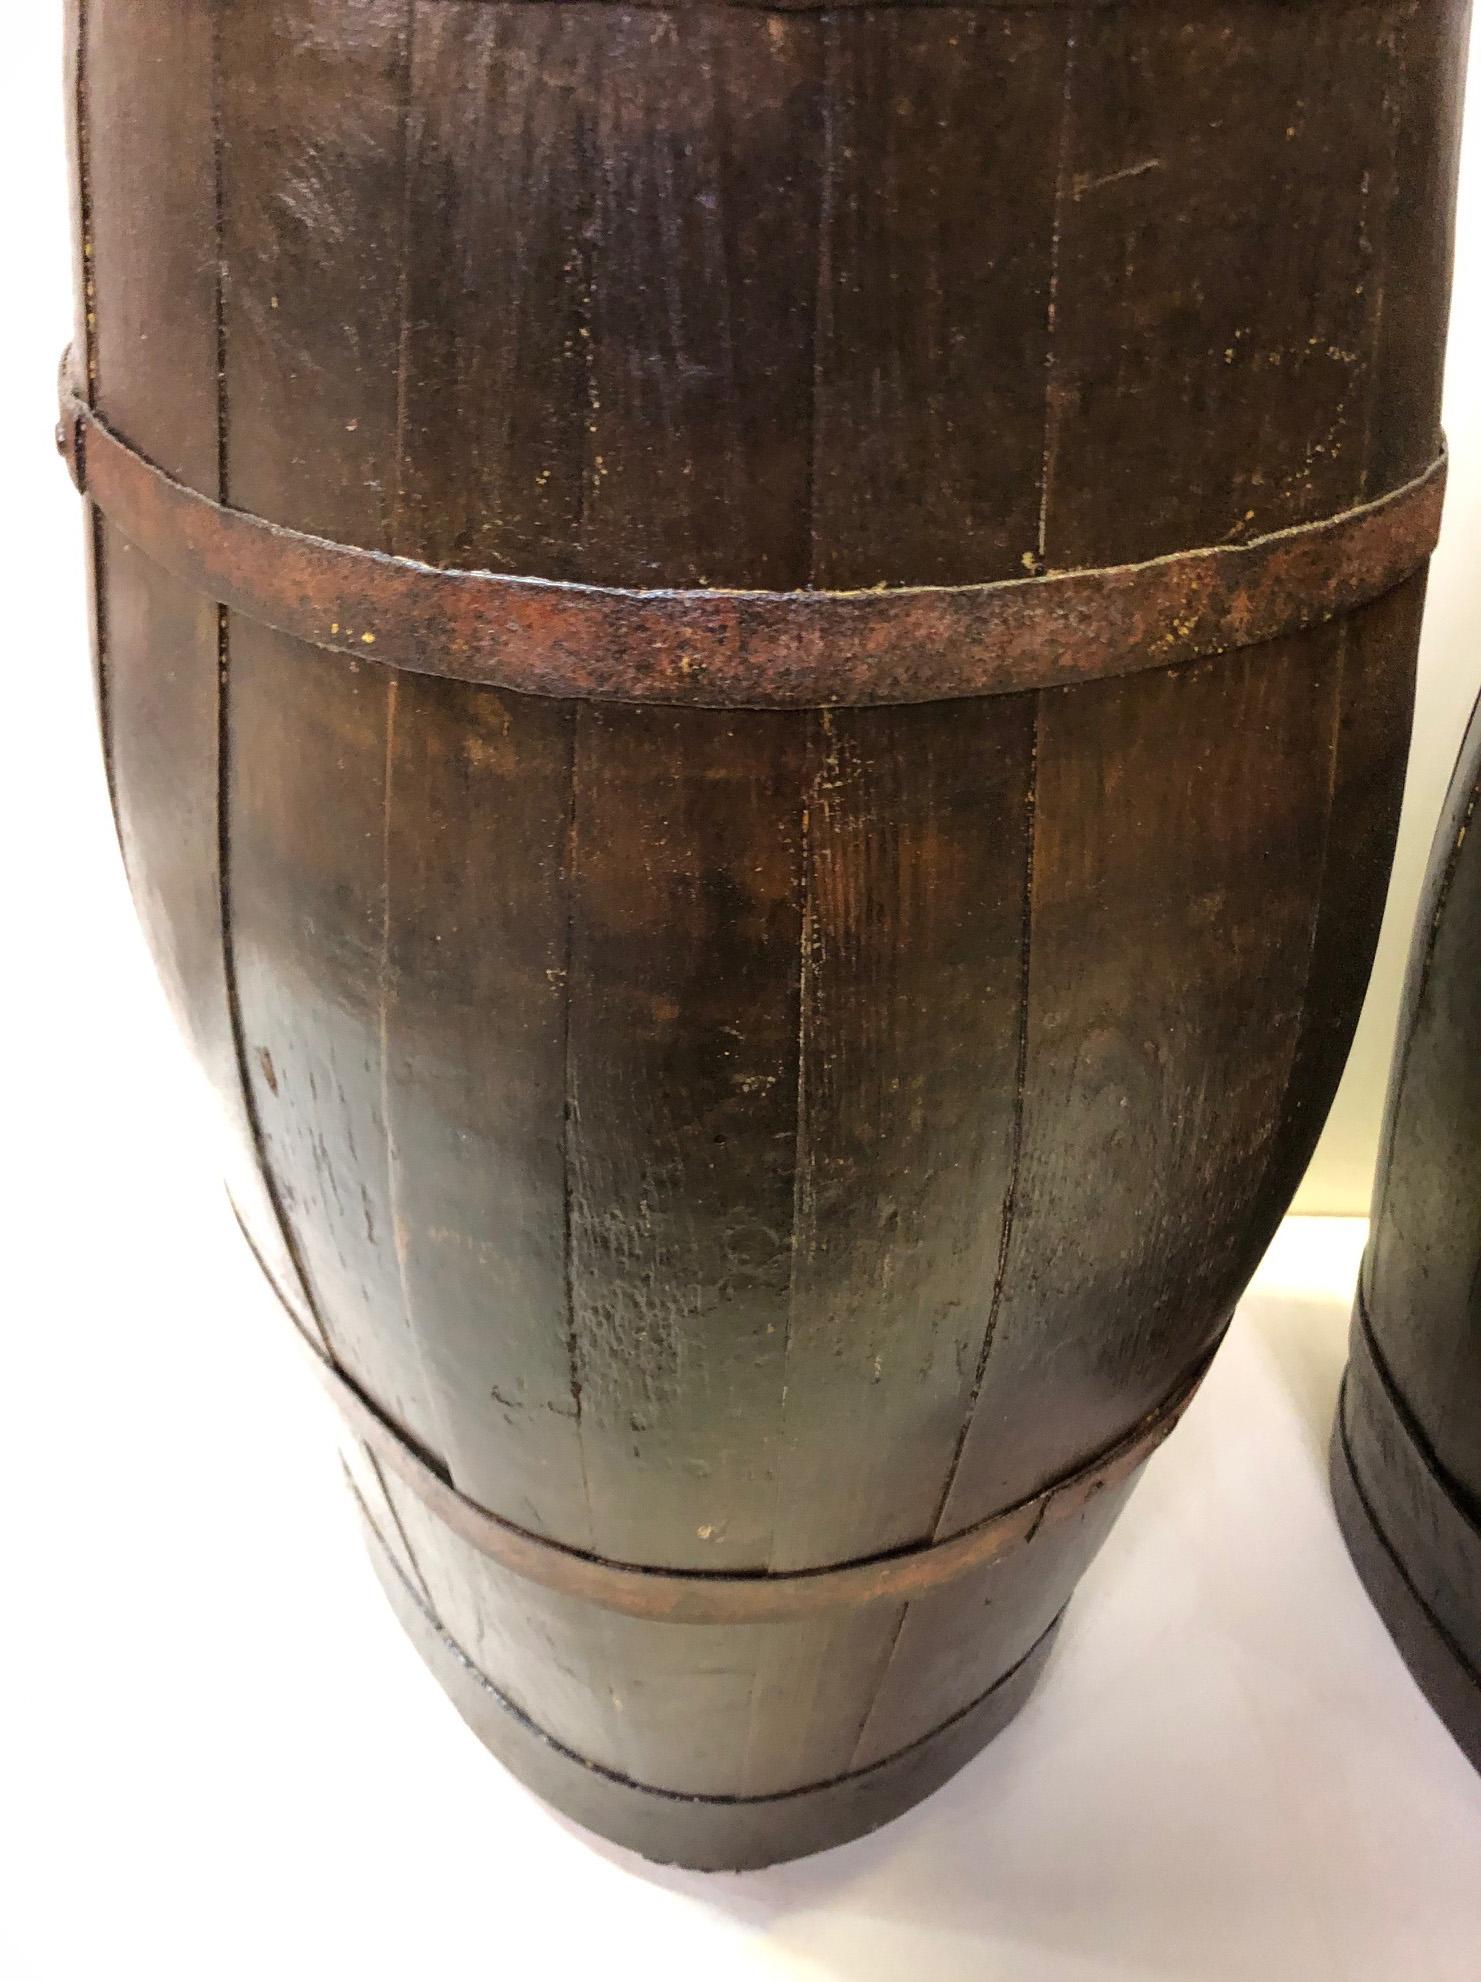 1900s Antique Italian Oak Barrels for Vinification 2